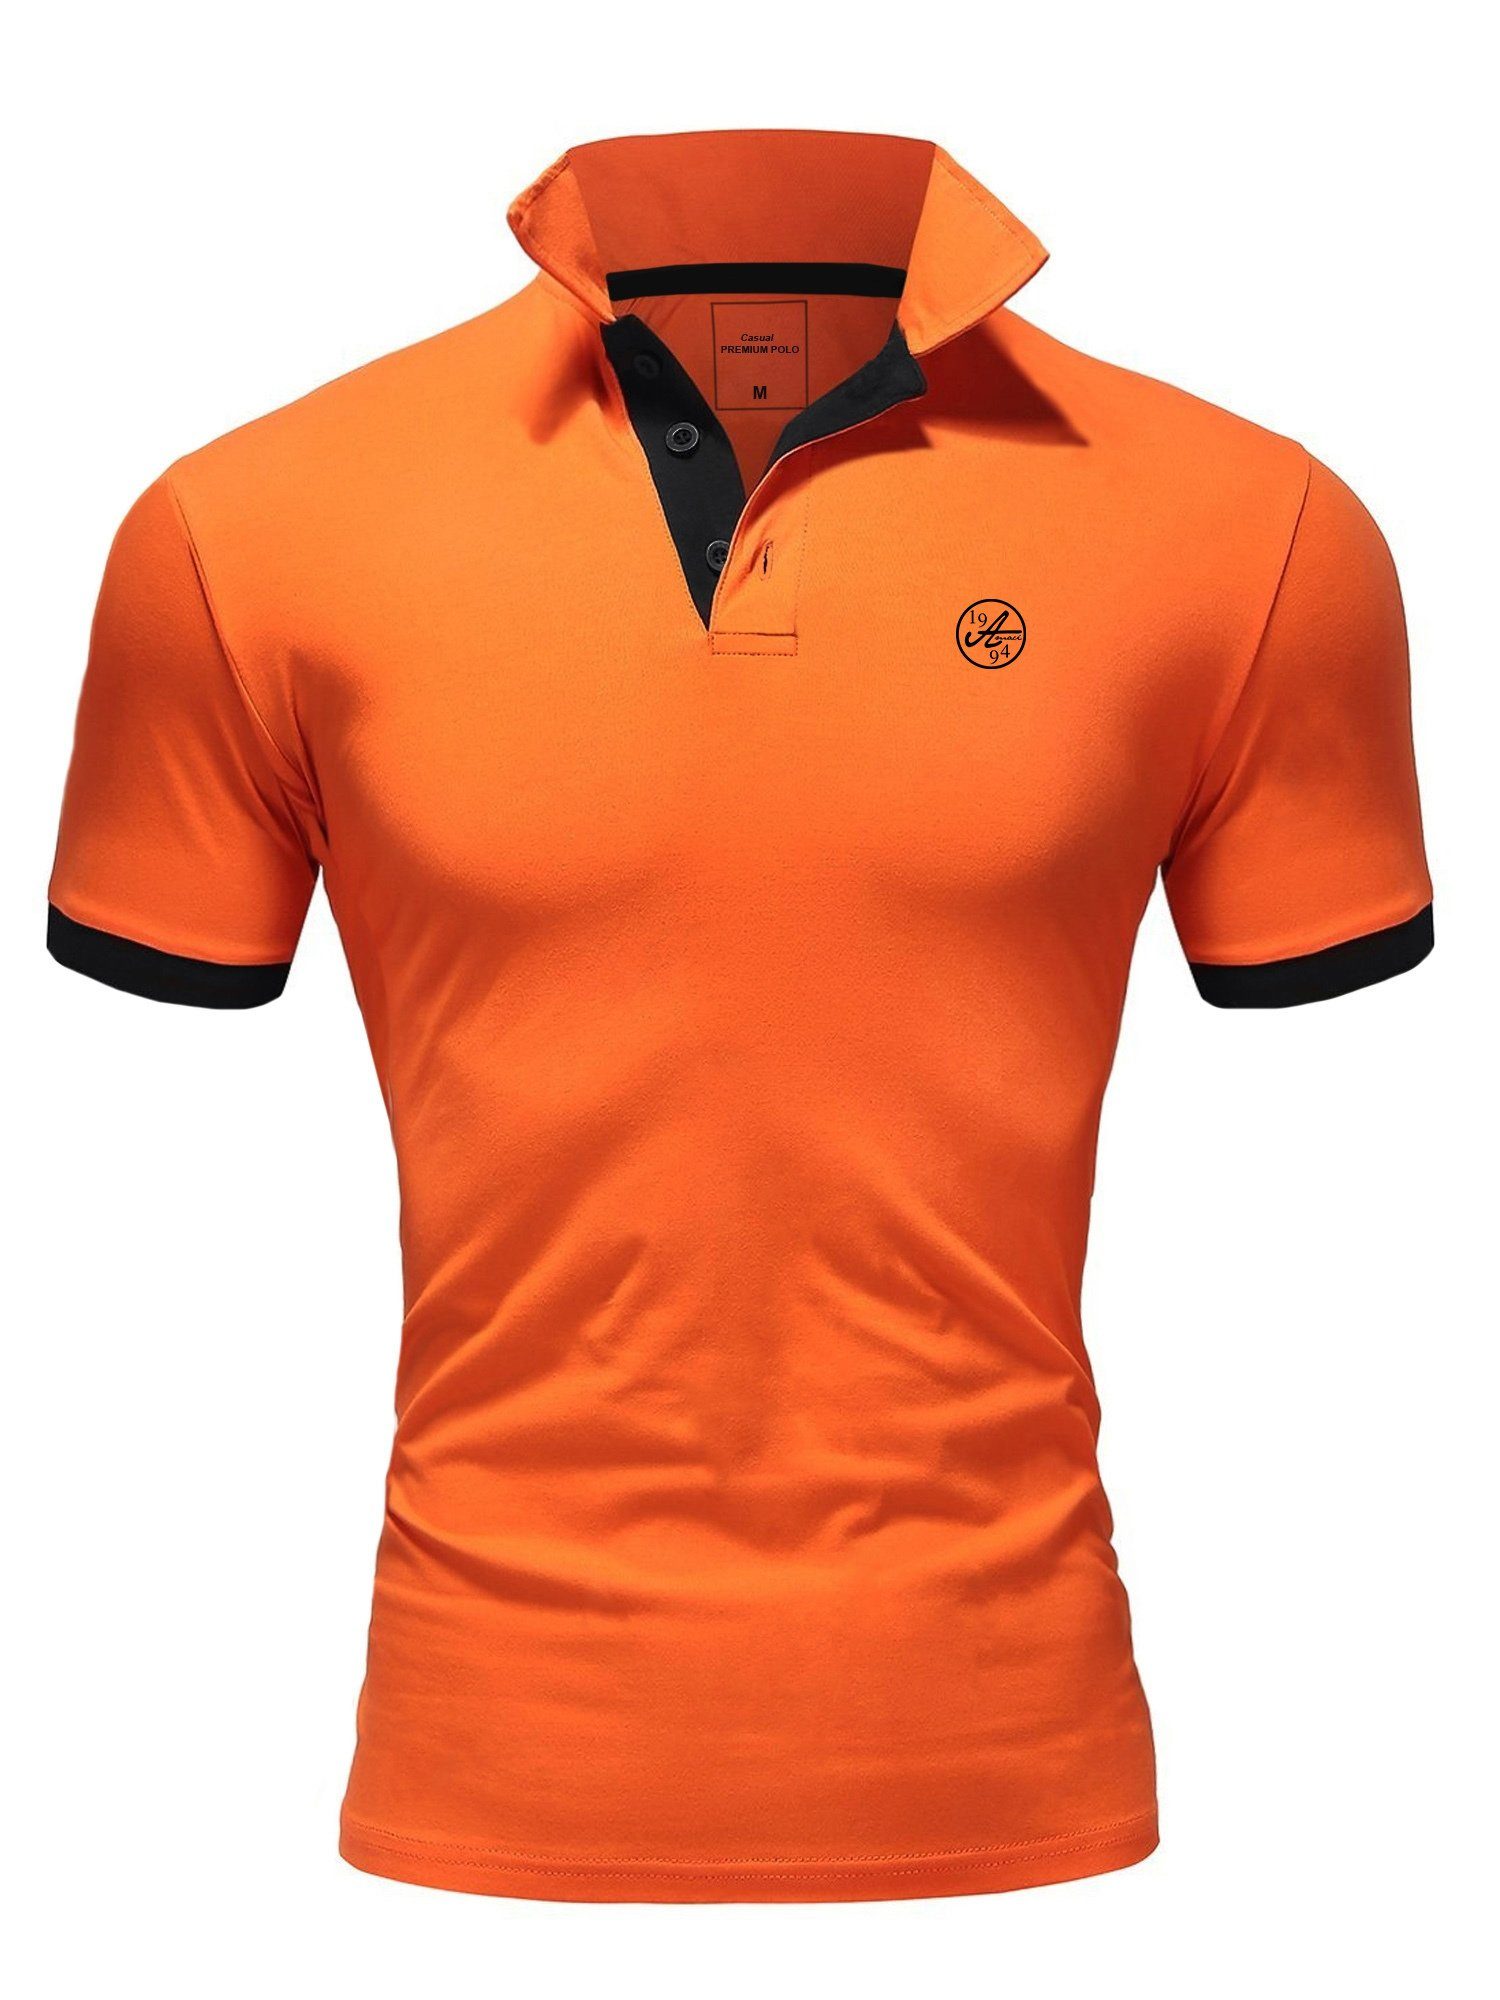 Amaci&Sons MEMPHIS Poloshirt Kontrast Shirt Basic Polo Orange/Schwarz